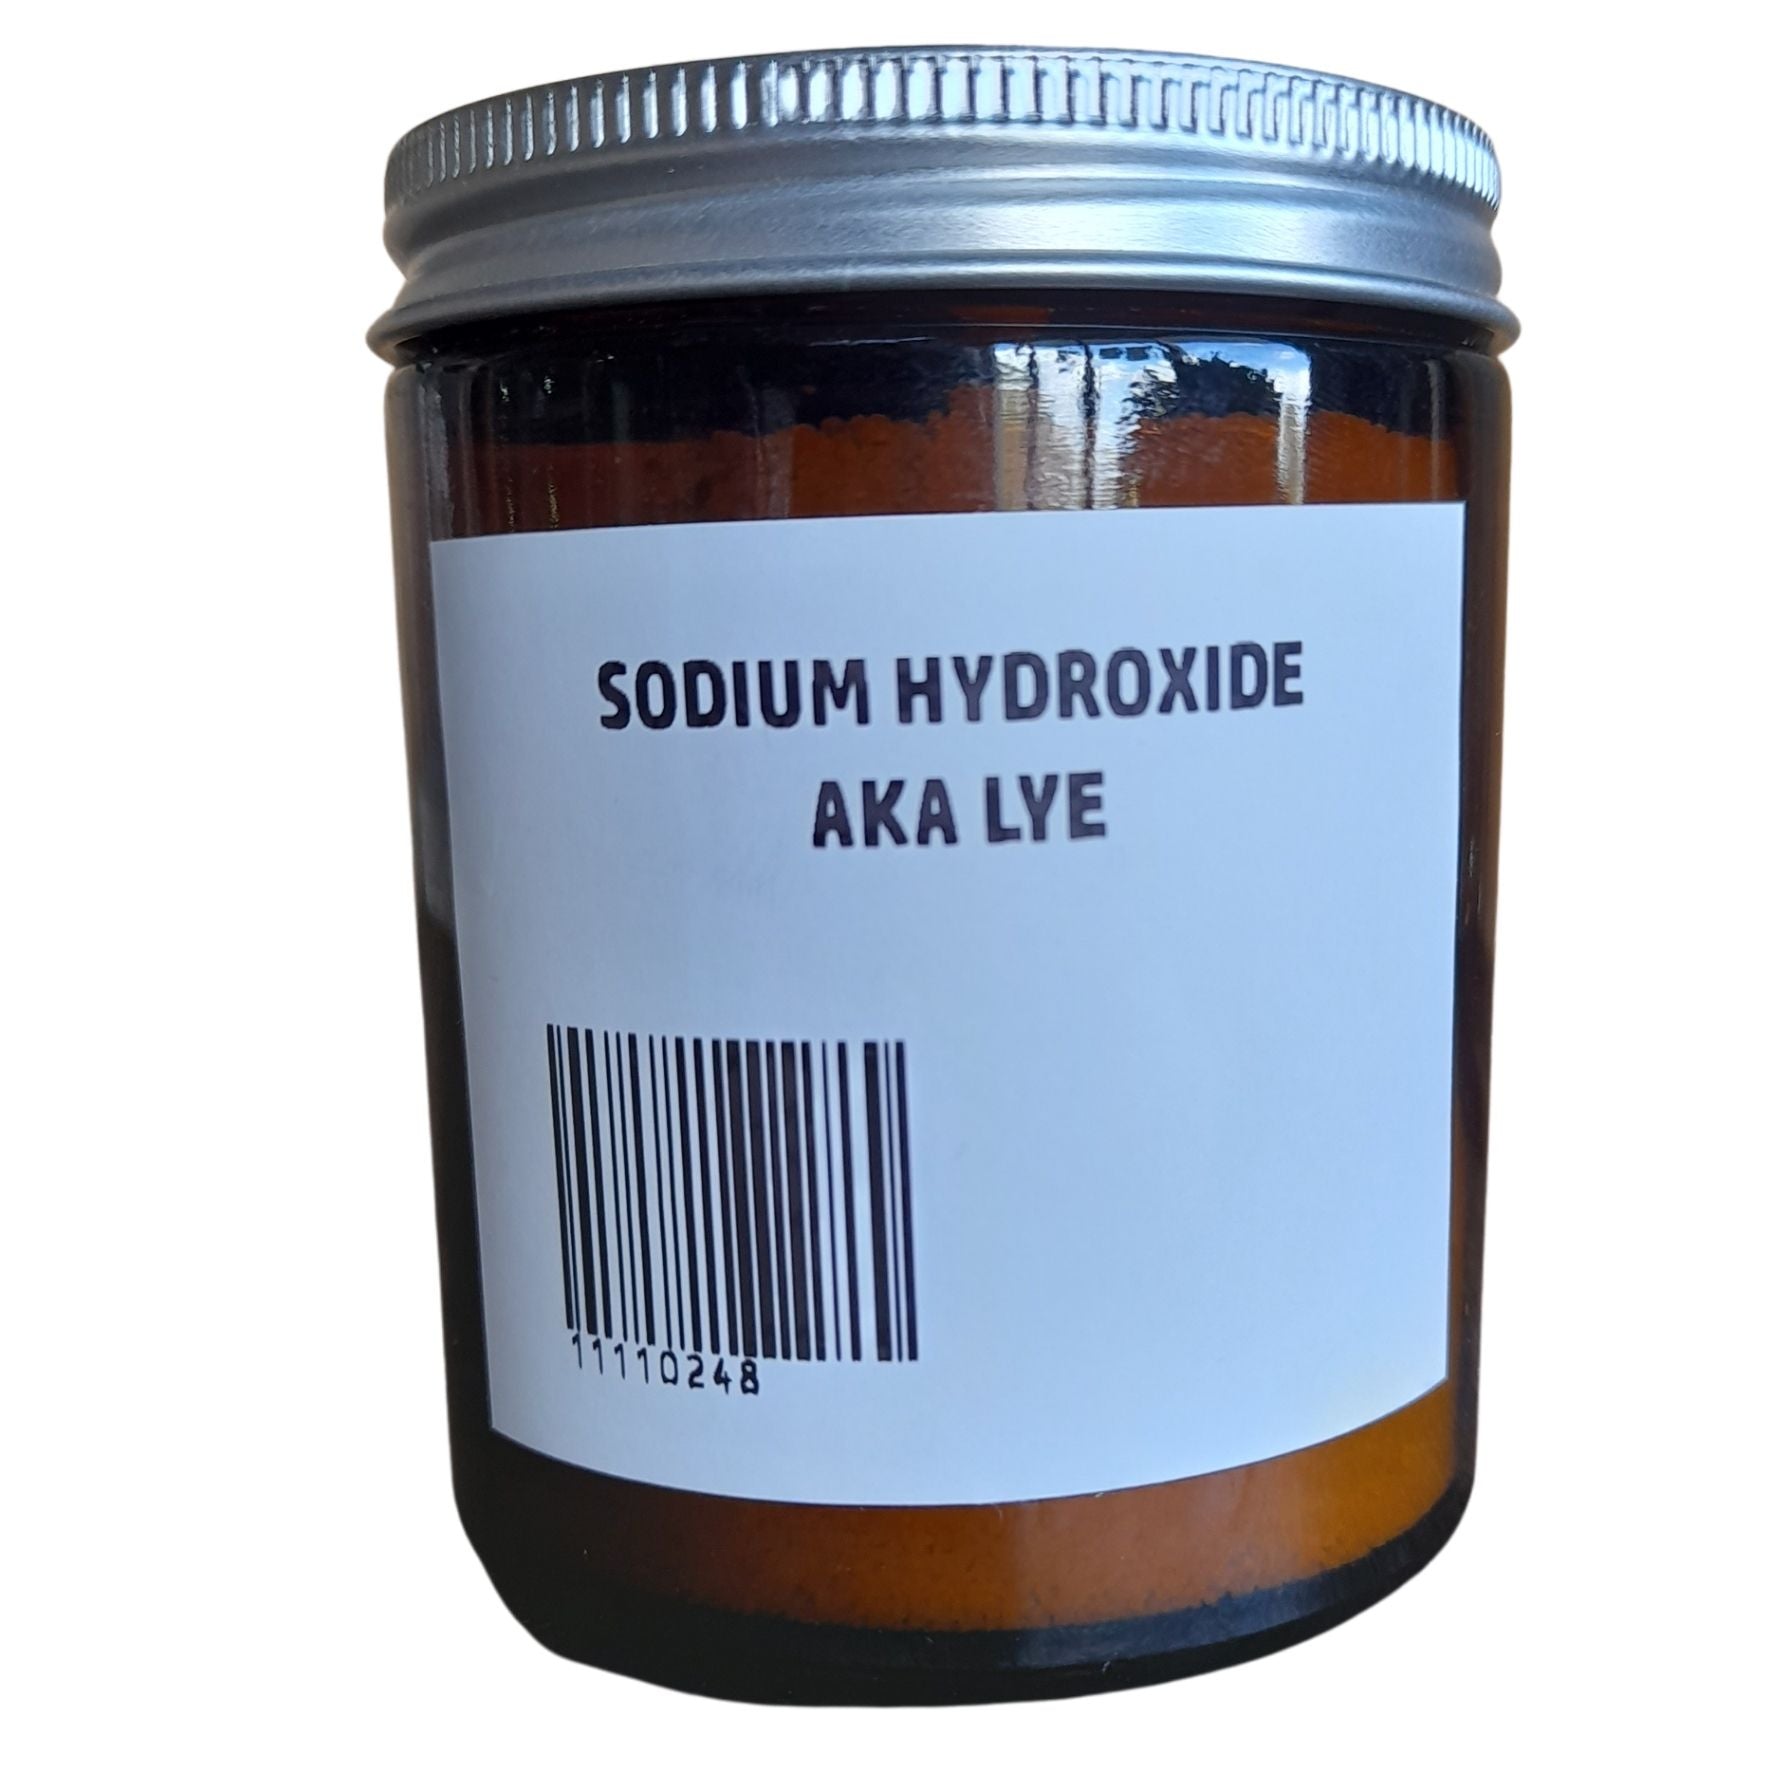 Sodium Hydroxide 150g AKA Lye